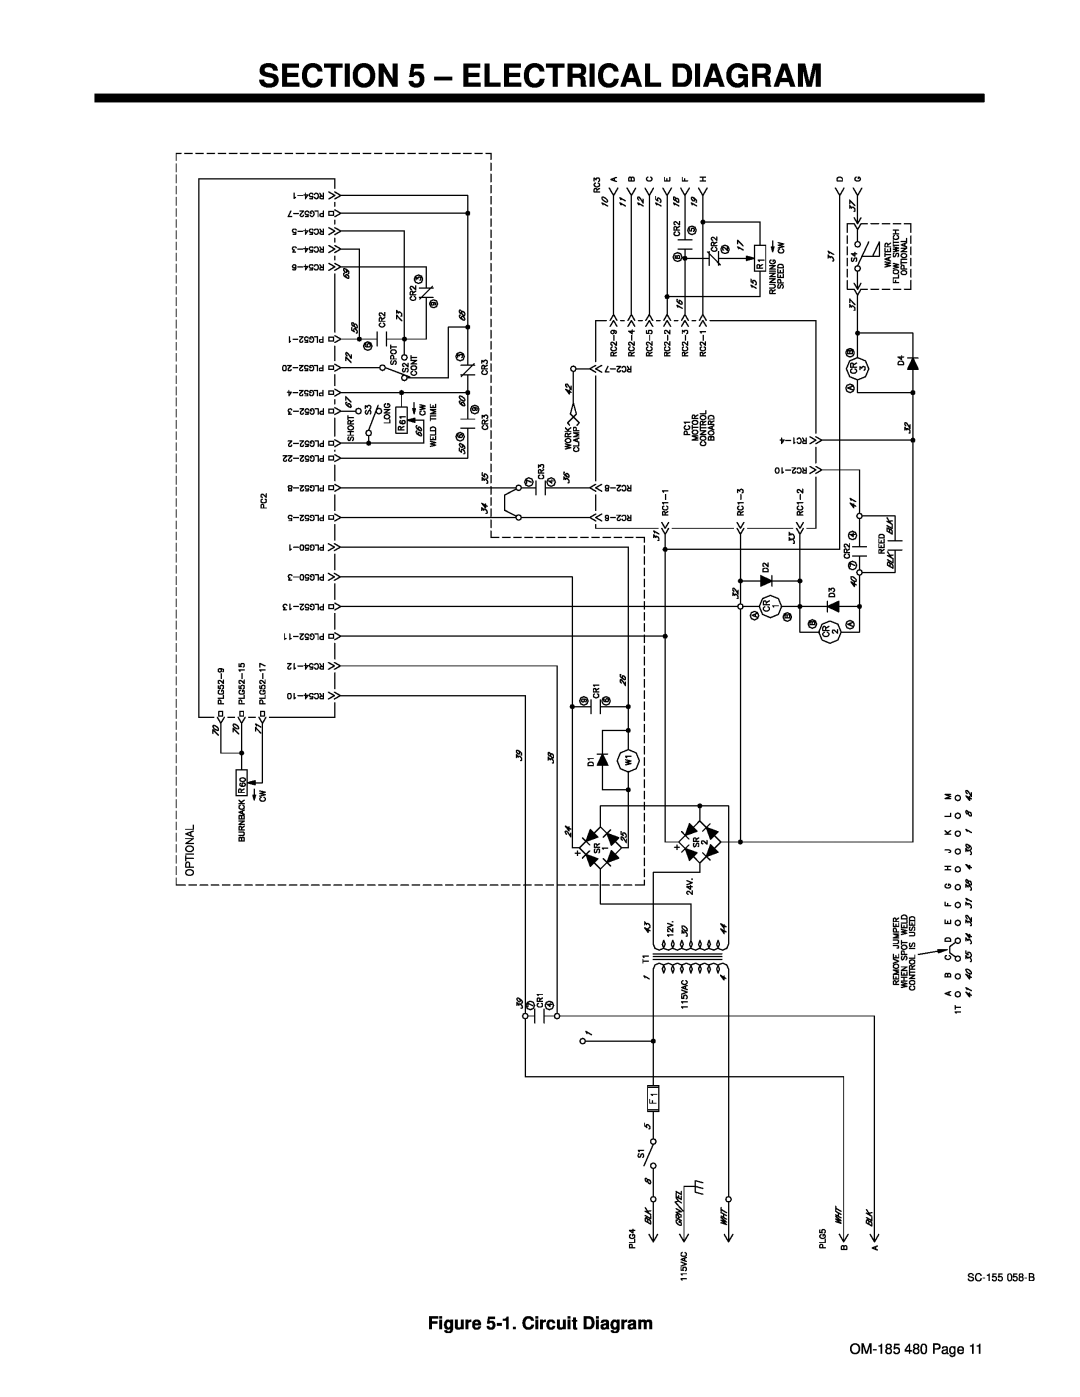 Hobart Welding Products HWC-115A manual Electrical Diagram, 1. Circuit Diagram 